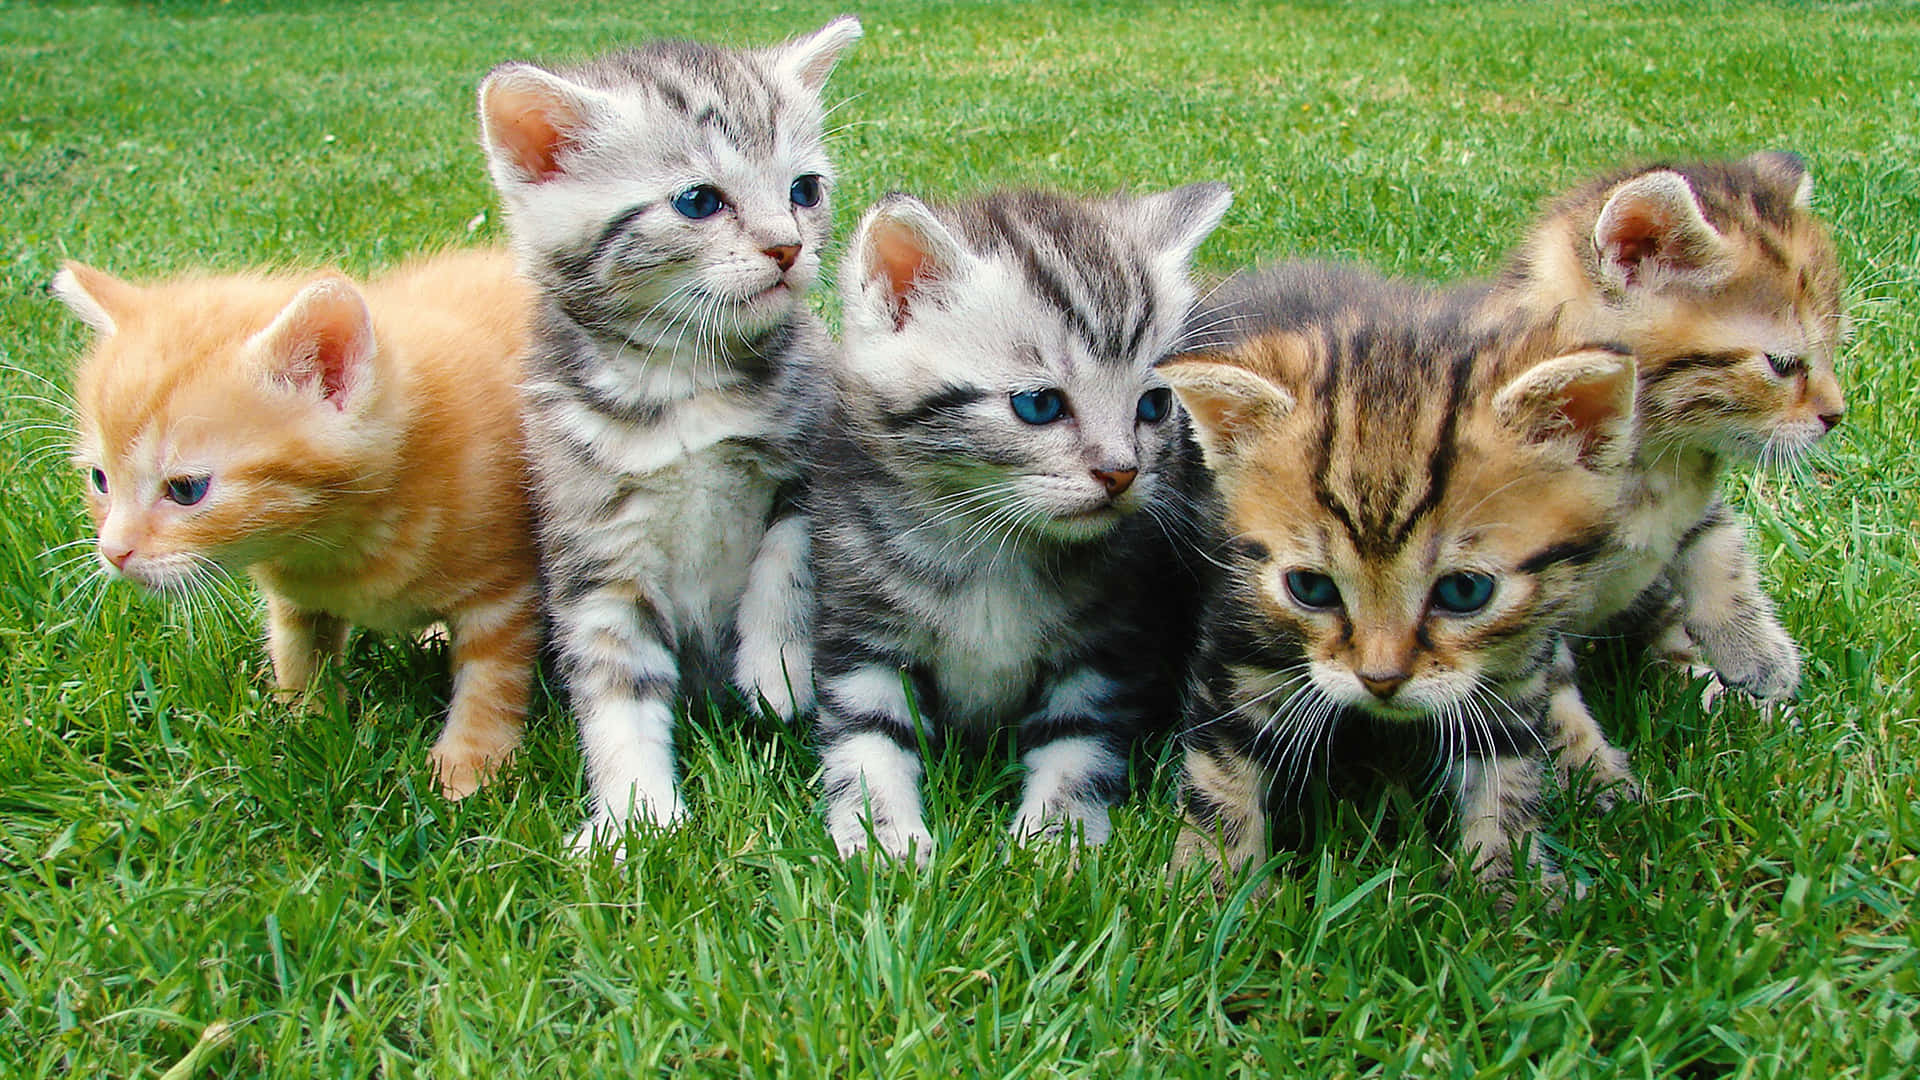 Cute Kitties On The Grass Wallpaper